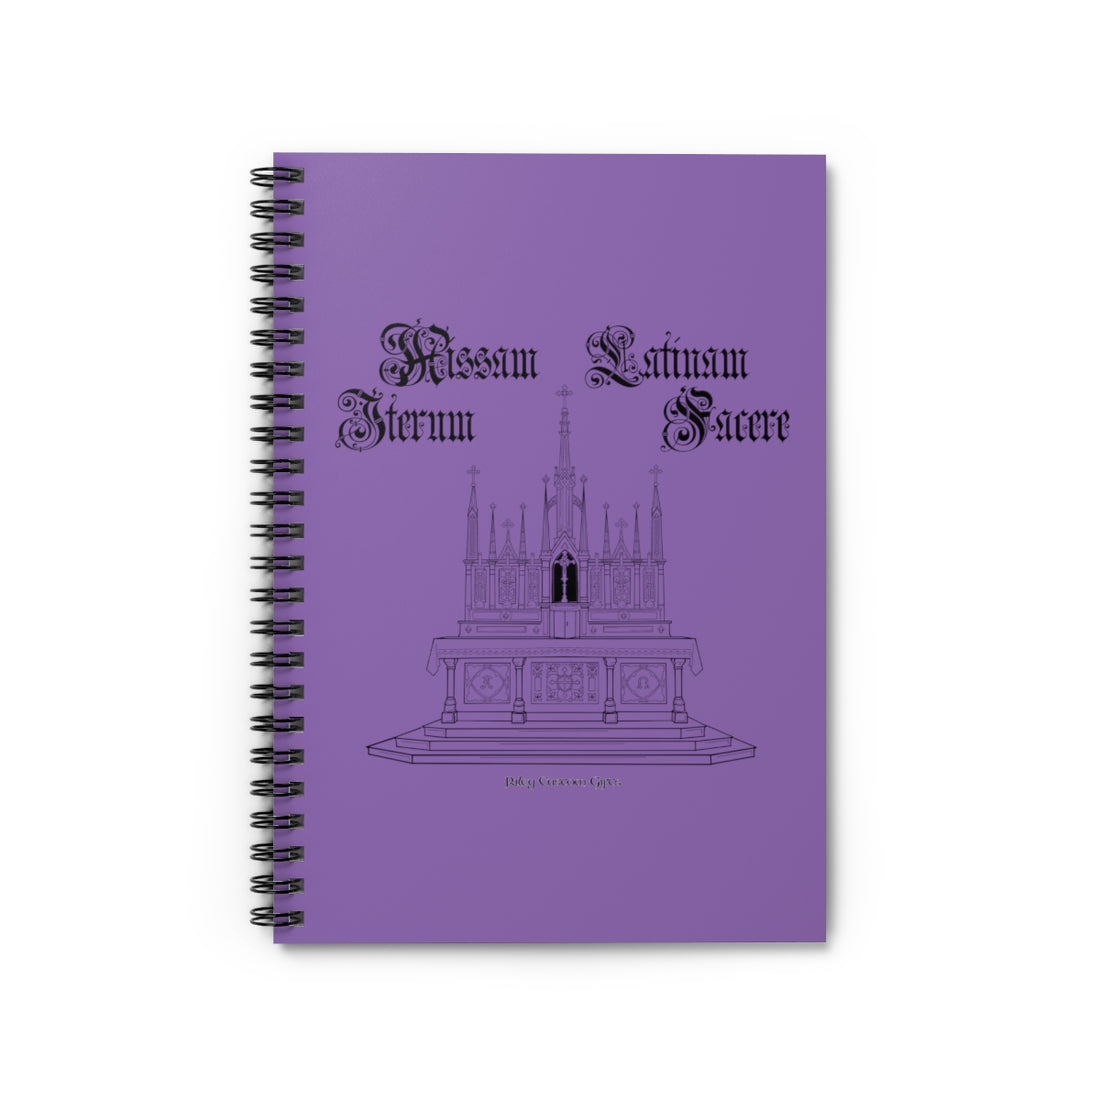 "Make Mass Latin Again" Spiral Notebook - Ruled Line